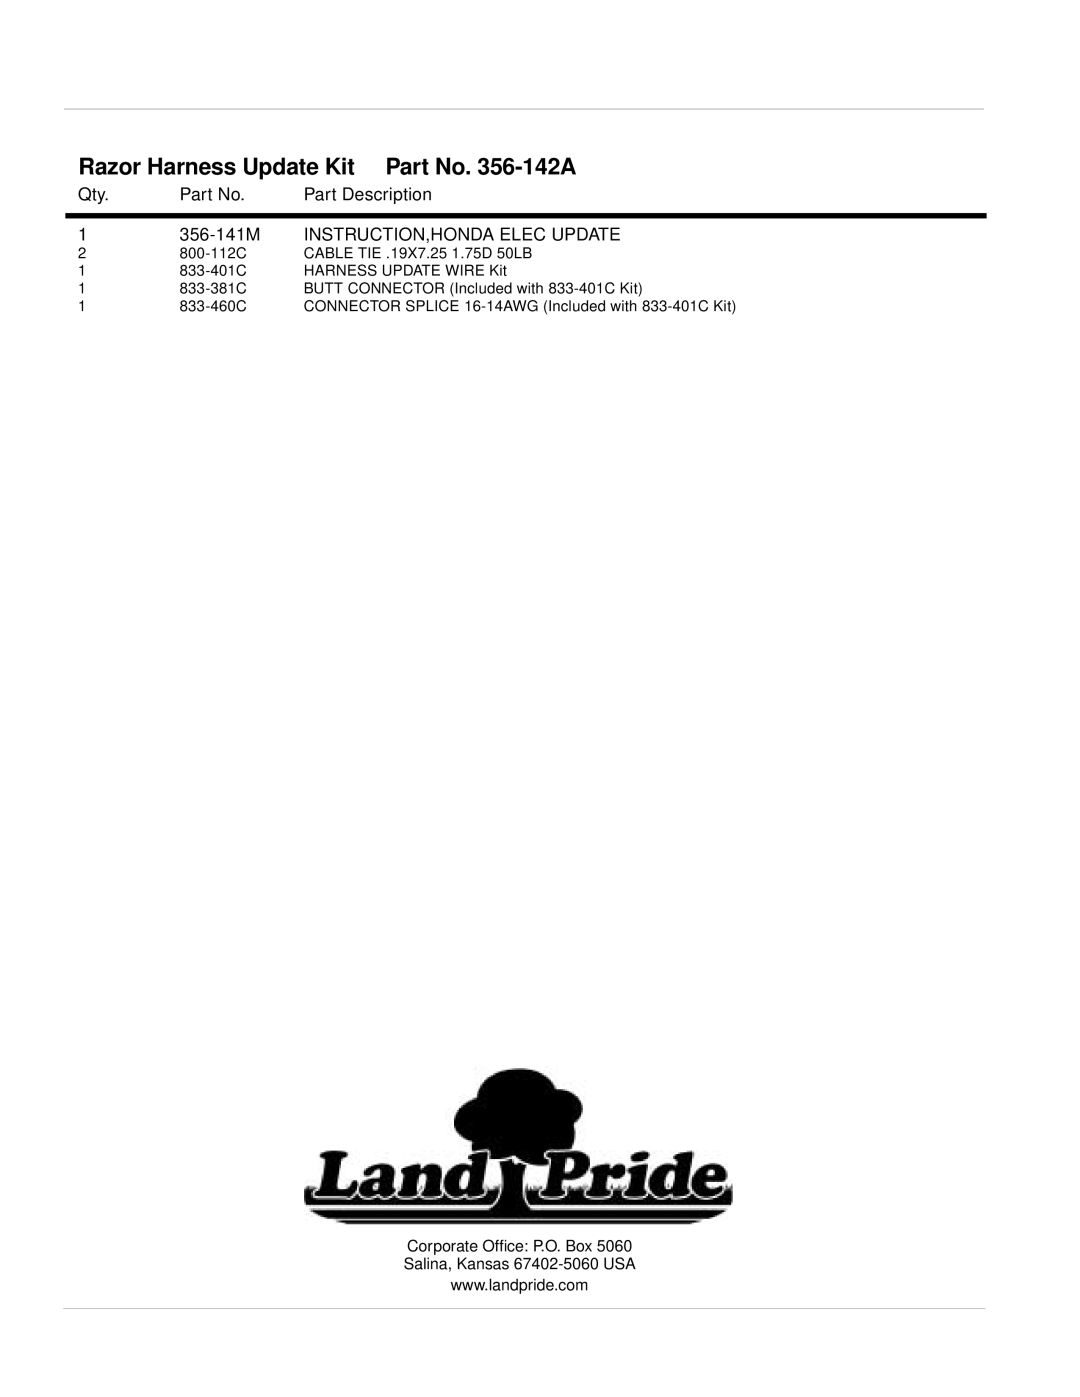 Land Pride Razor Harness Update Kit Part No. 356-142A, Corporate Ofﬁce P.O. Box Salina, Kansas 67402-5060 USA, 833-401C 